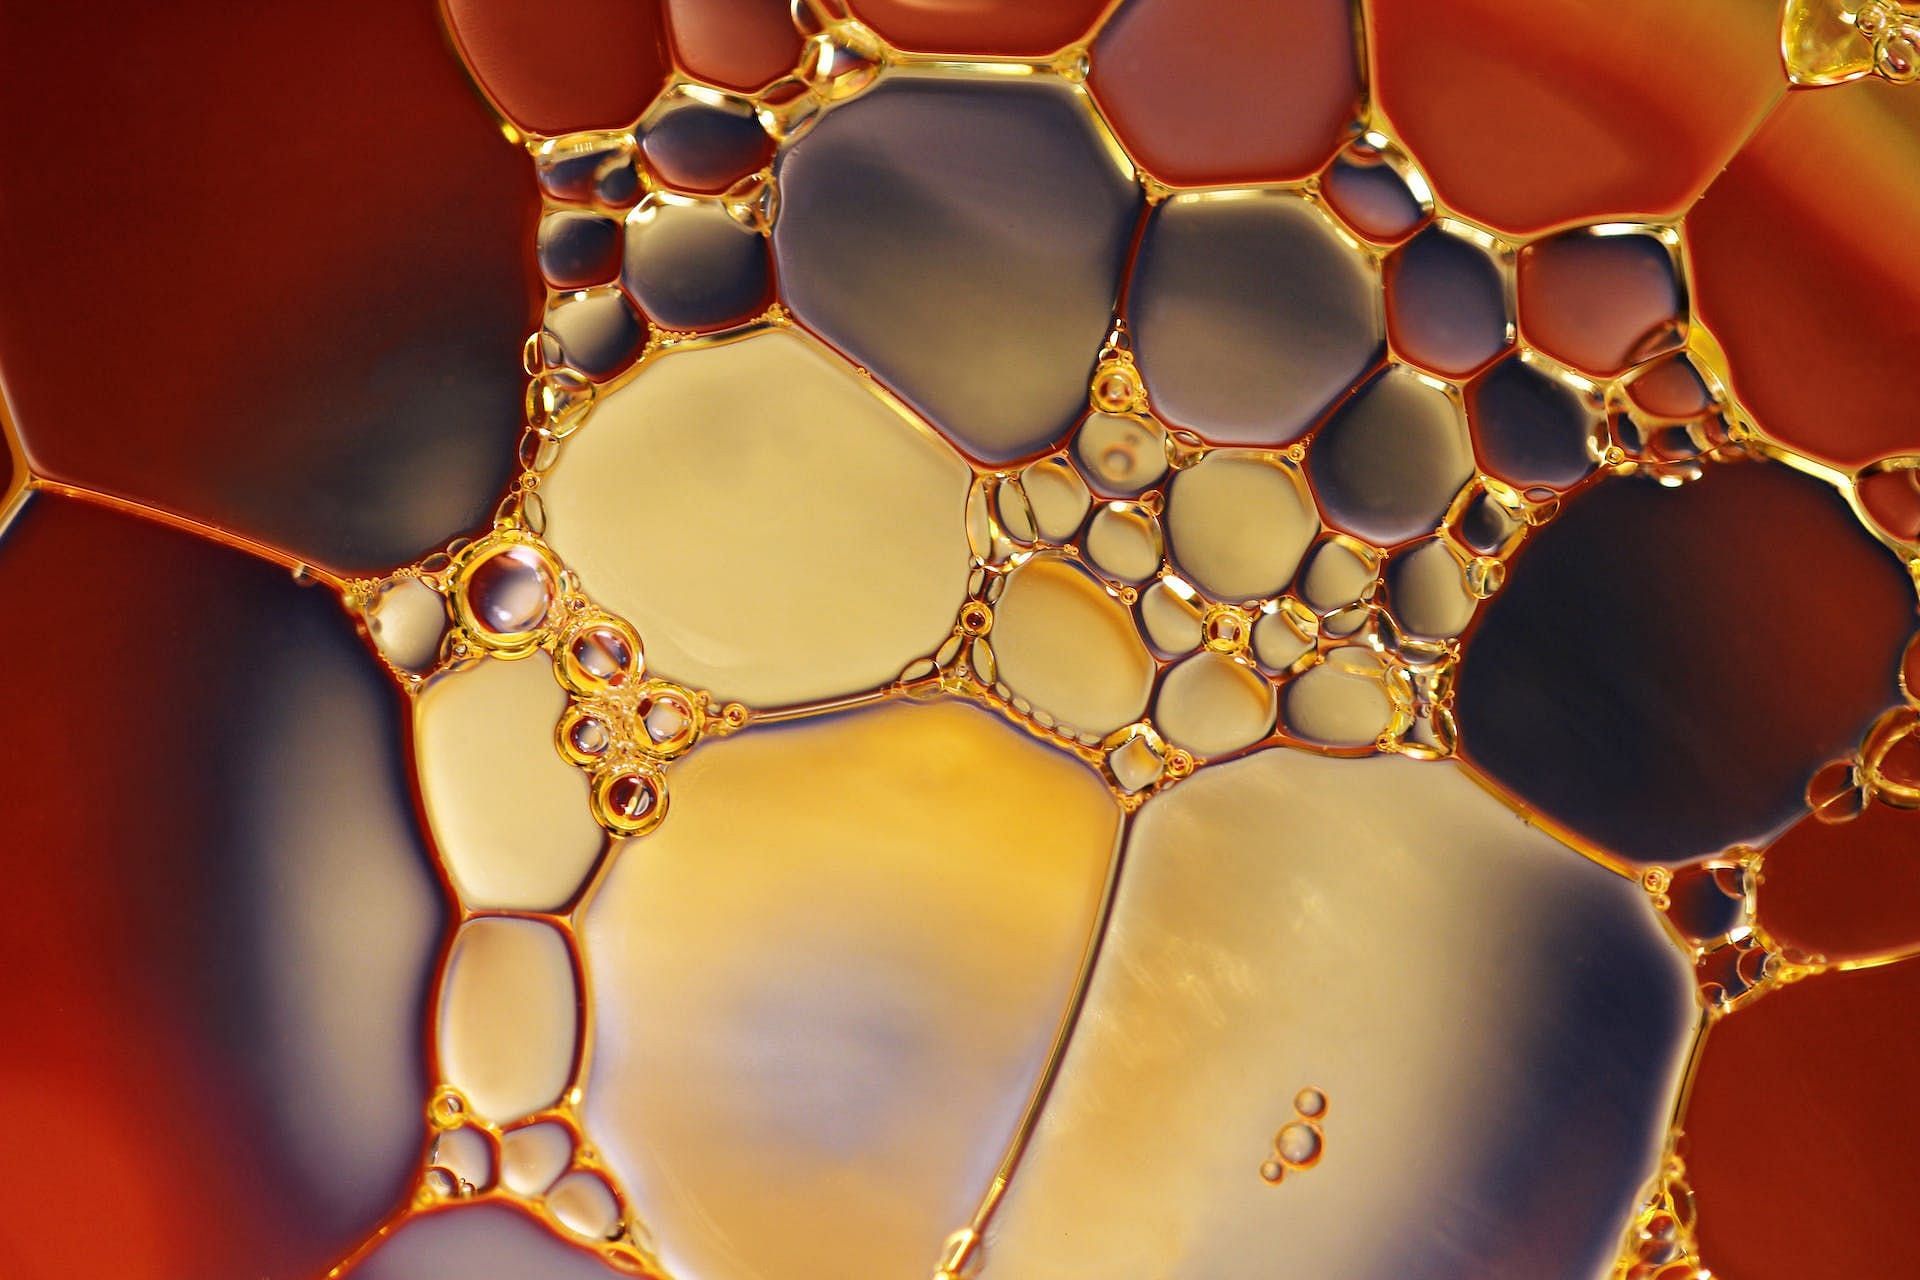 Algal Oil (Image via Pexels/ Pixabay)